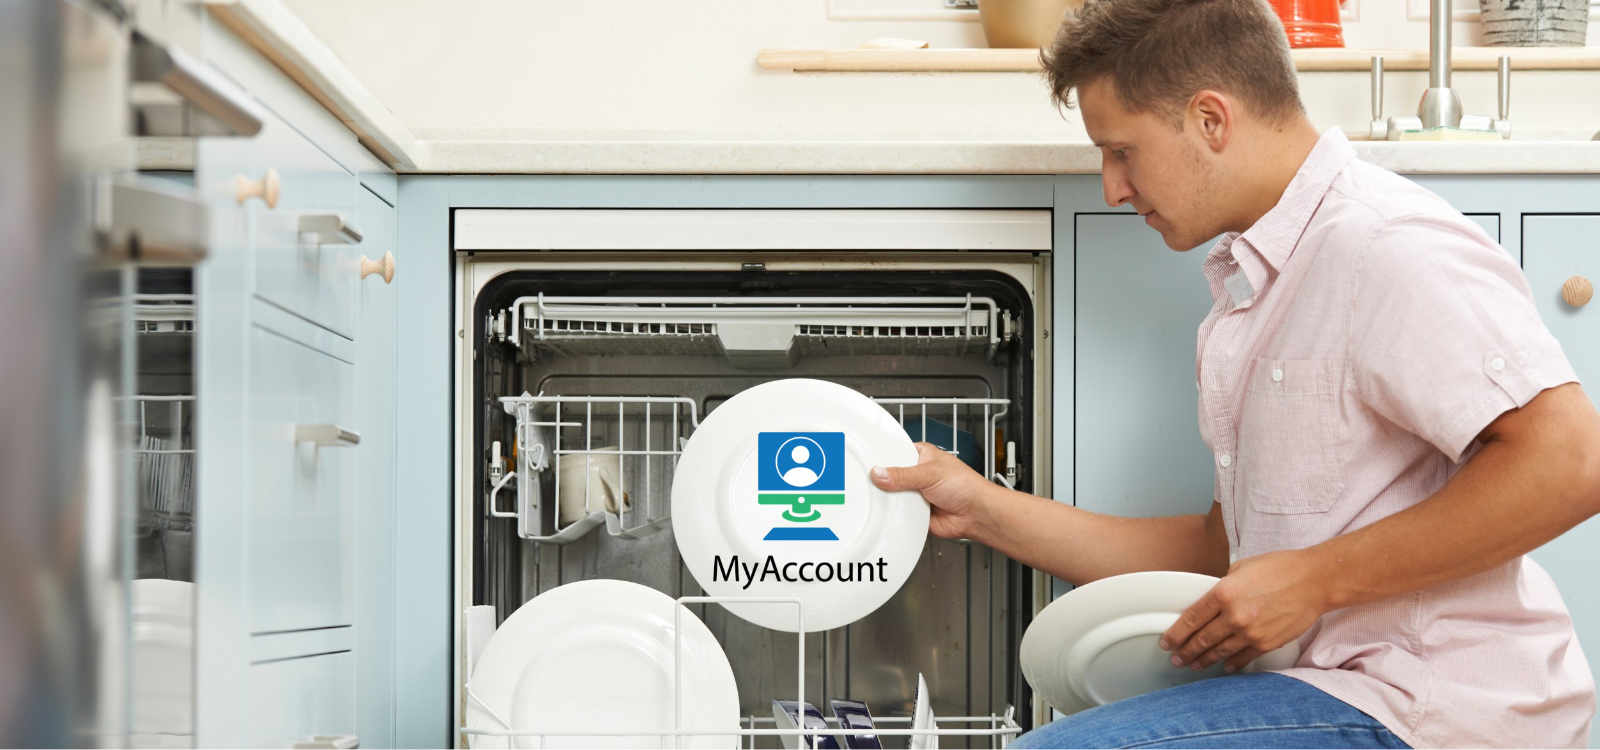 A branding image, MyAccount logo shown on a plate as man loads dishwasher